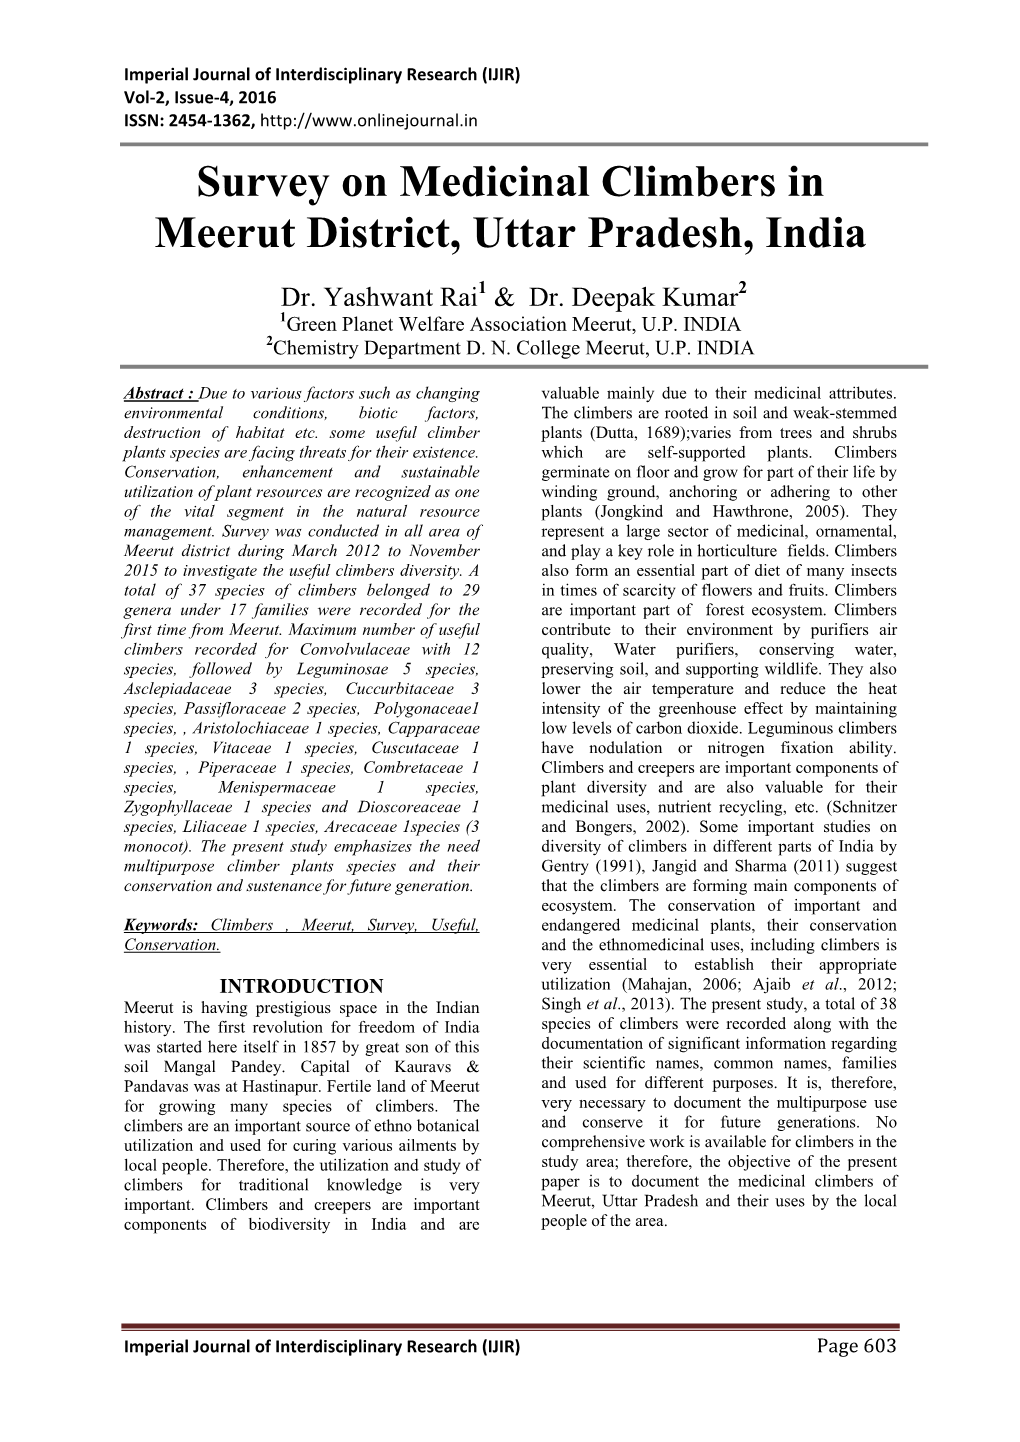 Survey on Medicinal Climbers in Meerut District, Uttar Pradesh, India